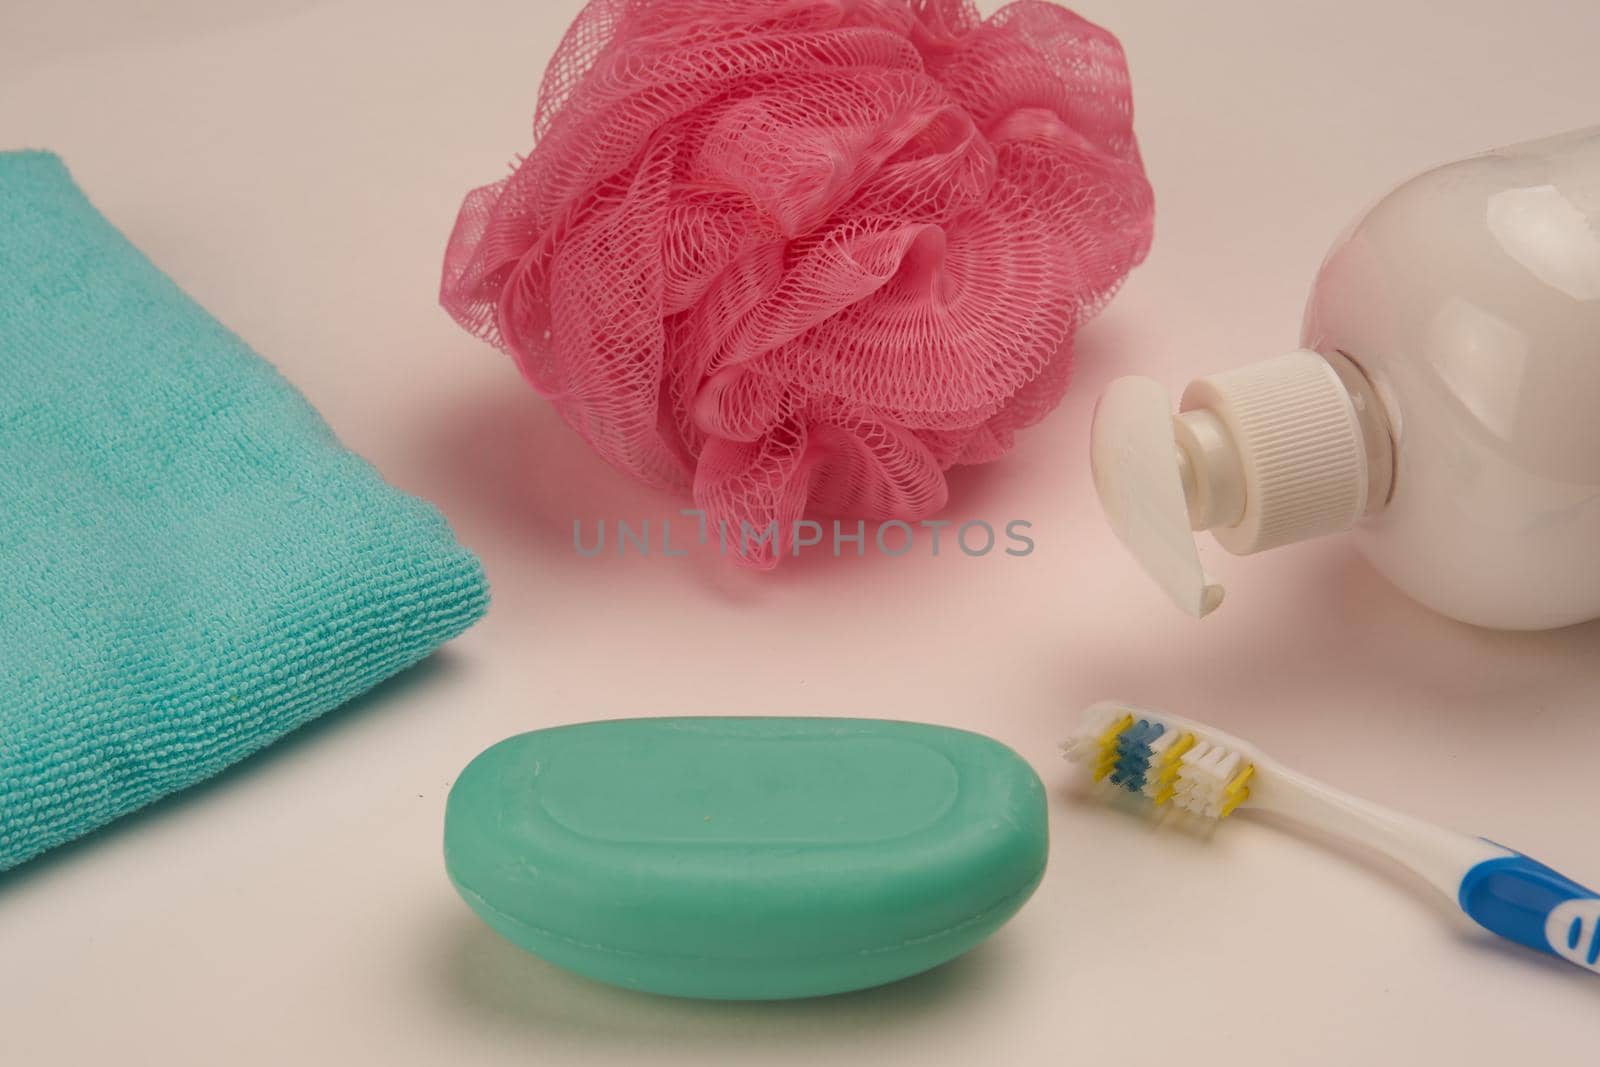 soap toothbrush hygiene health bathroom items by Vichizh